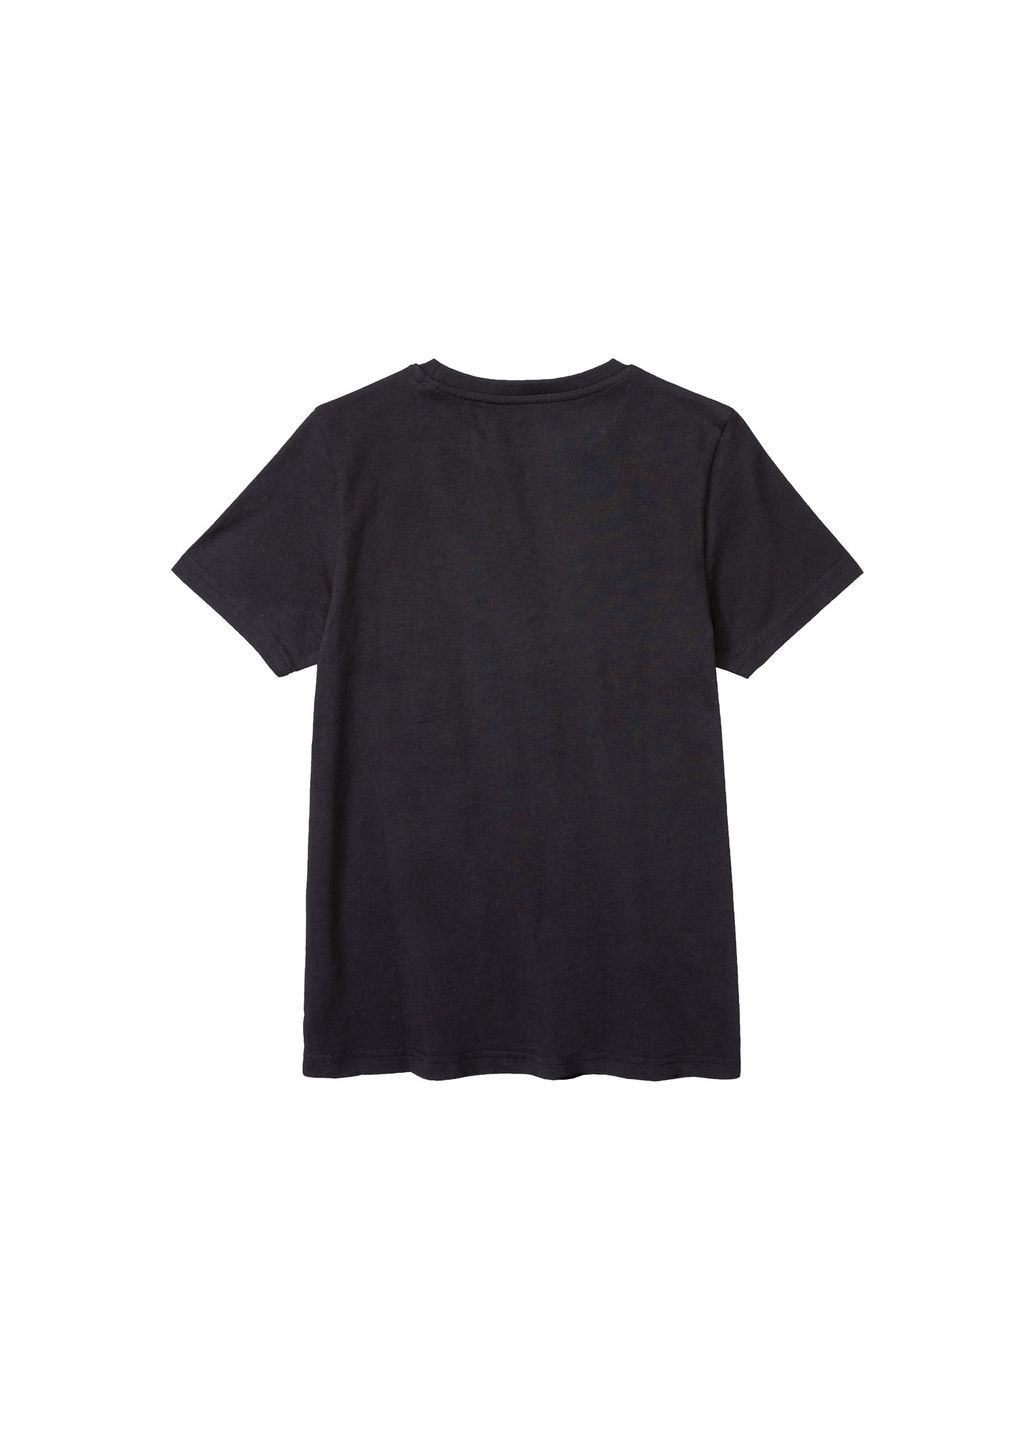 Чорна демісезонна футболка бавовняна для хлопчика 408589 чорний Pepperts